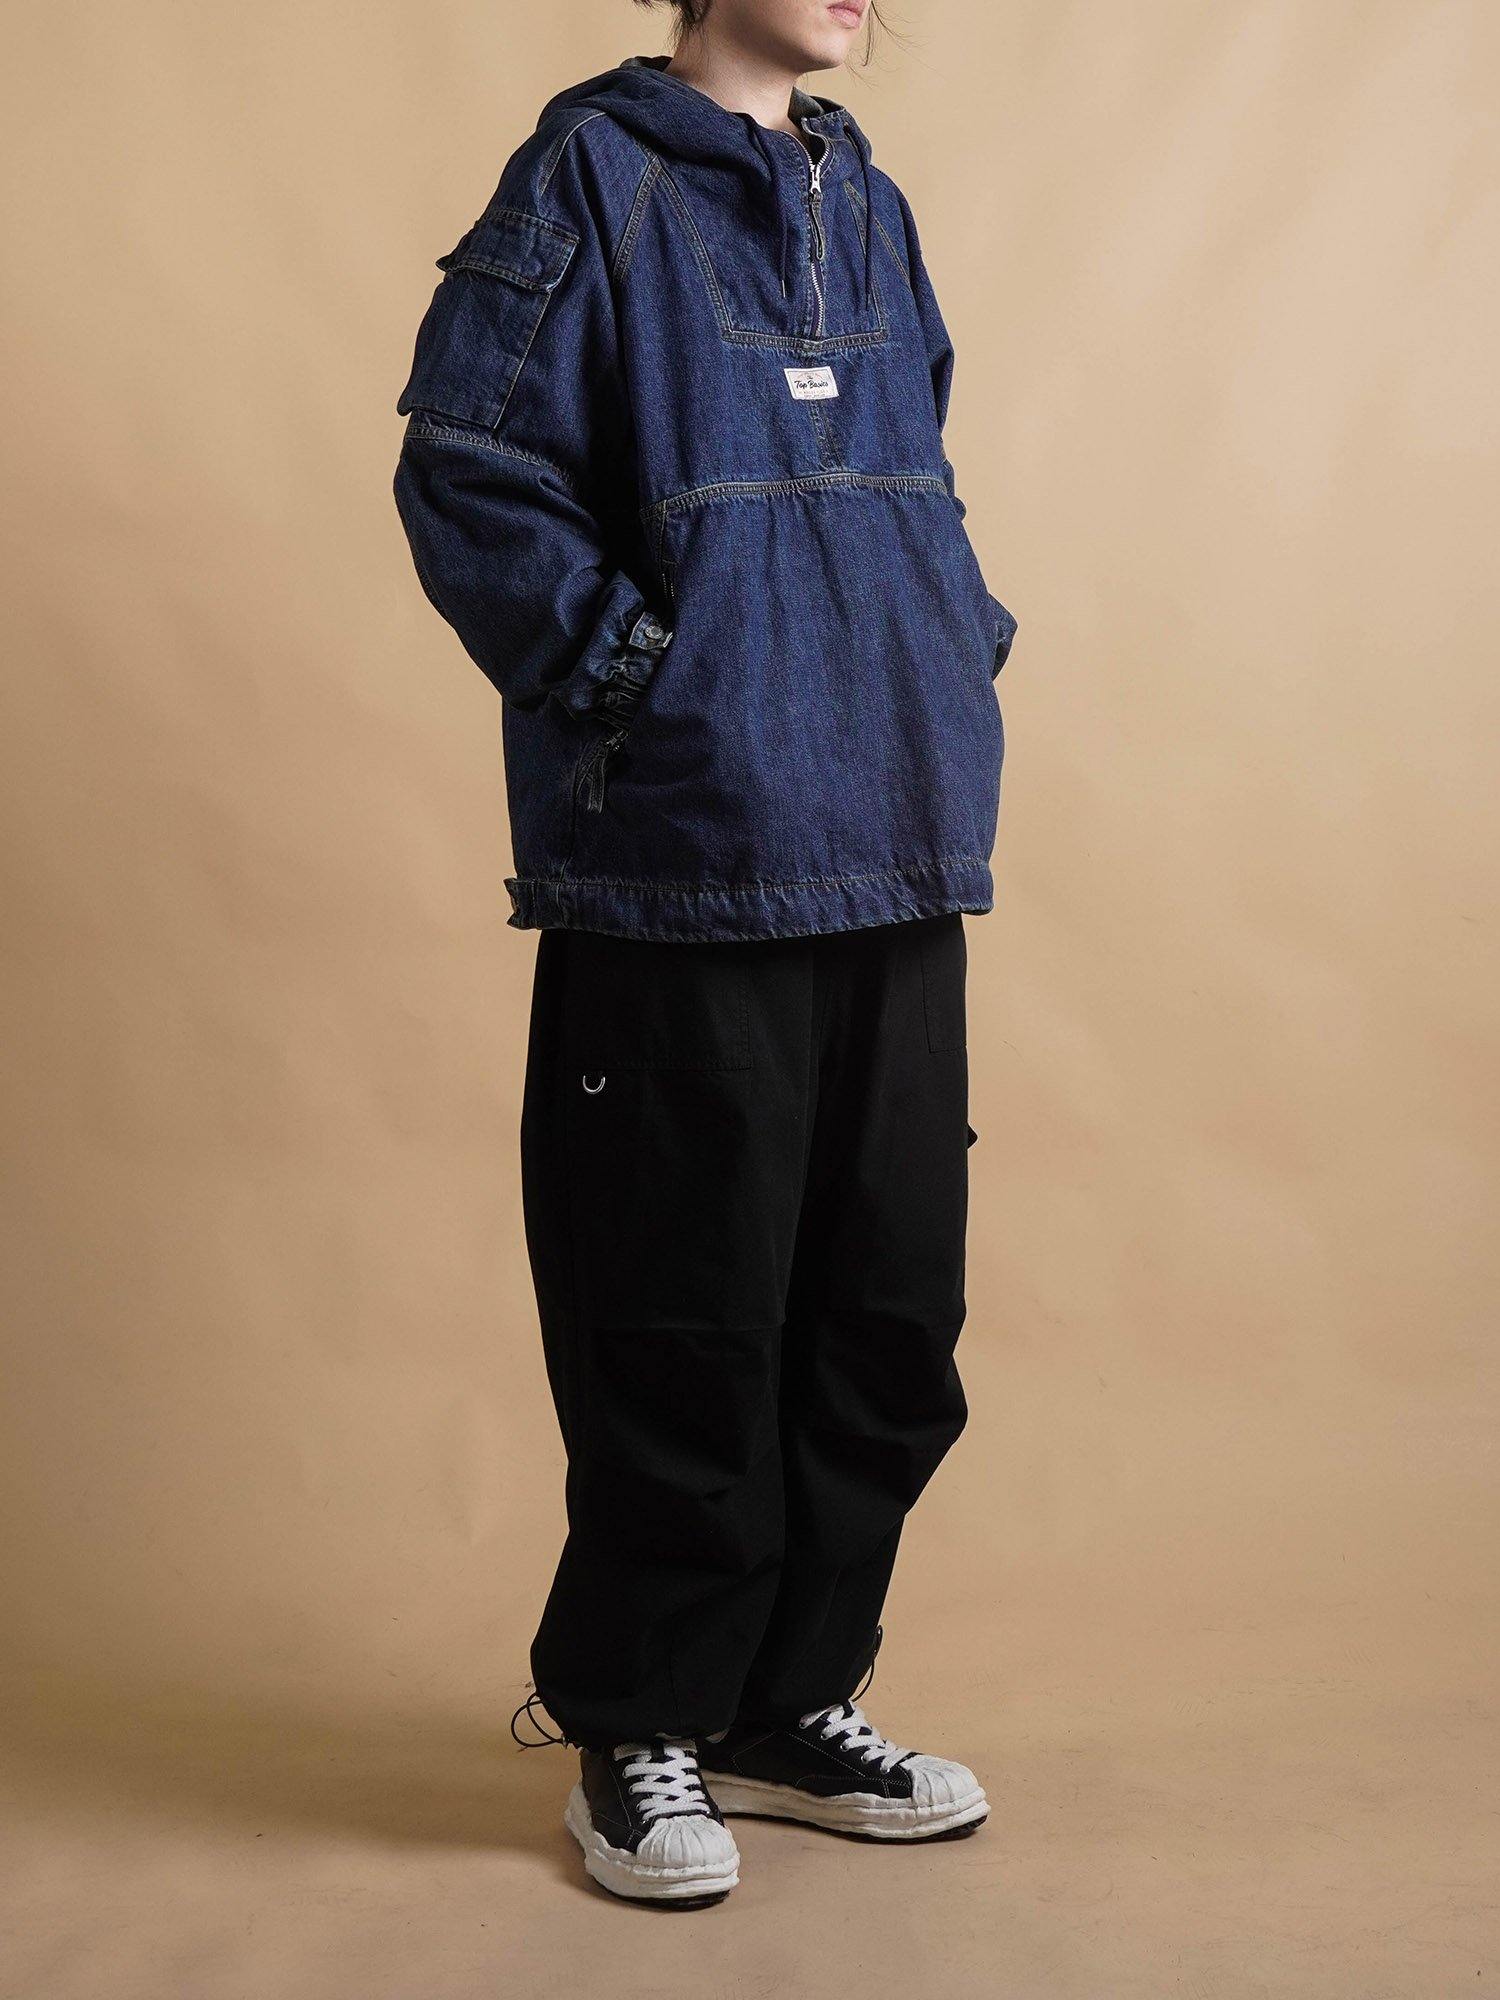 TopBasics Half-Zip Pullover Denim Jacket